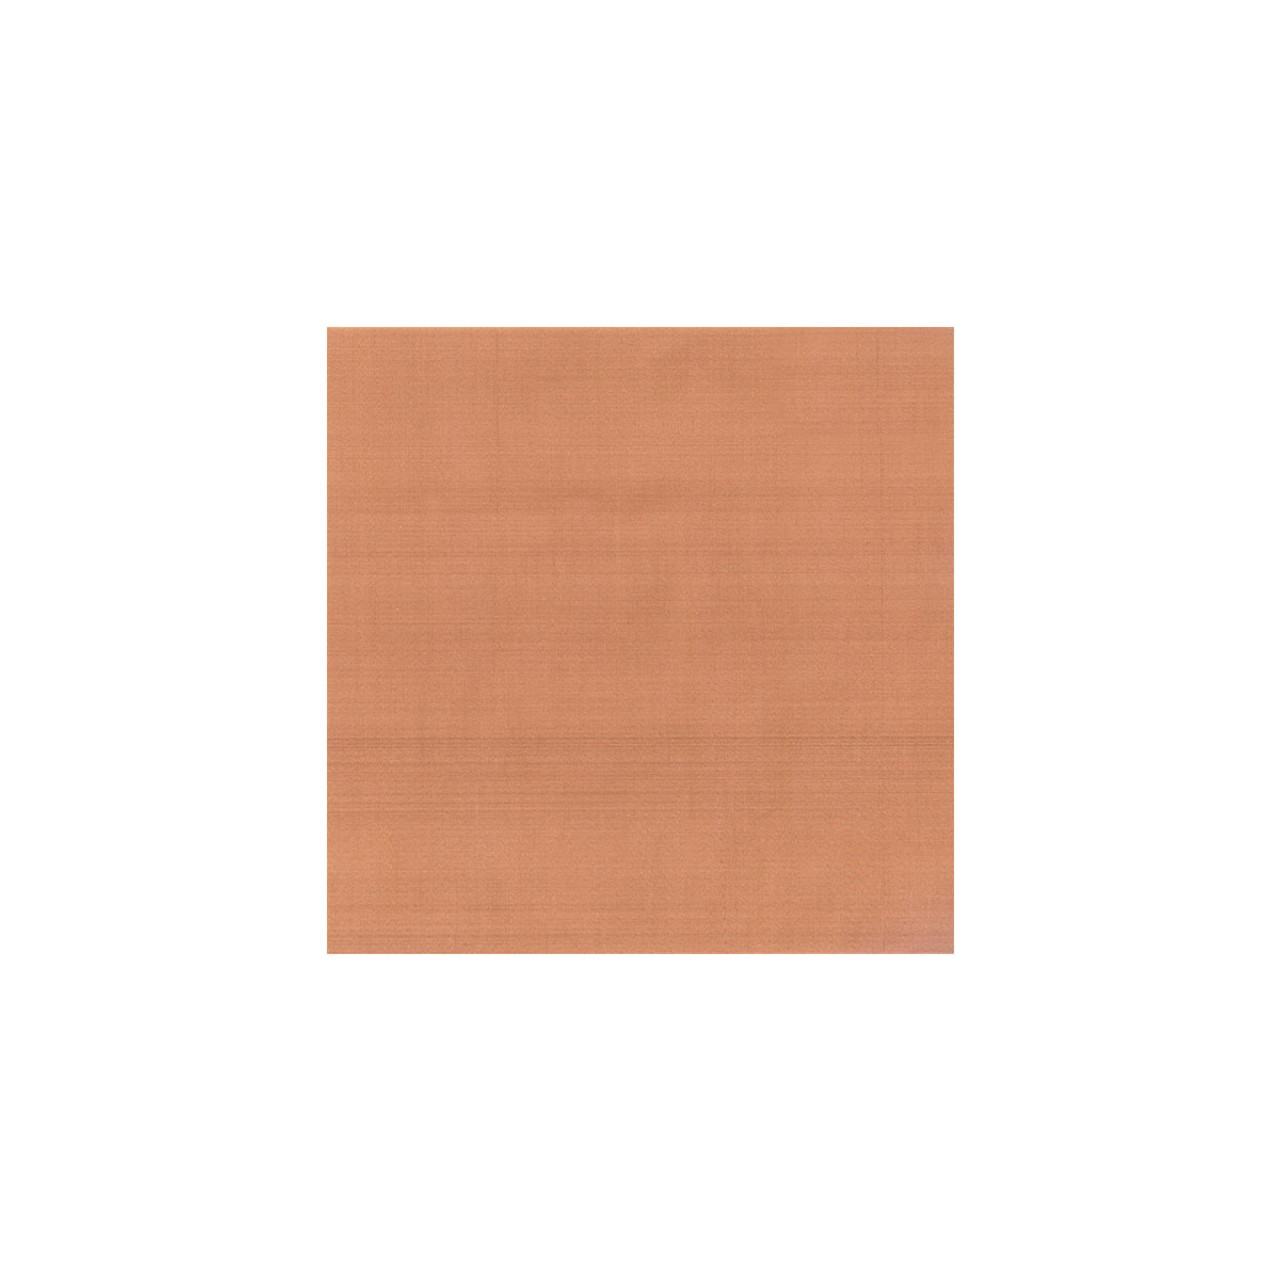 Inlay Metal Fabric Mesh - Copper